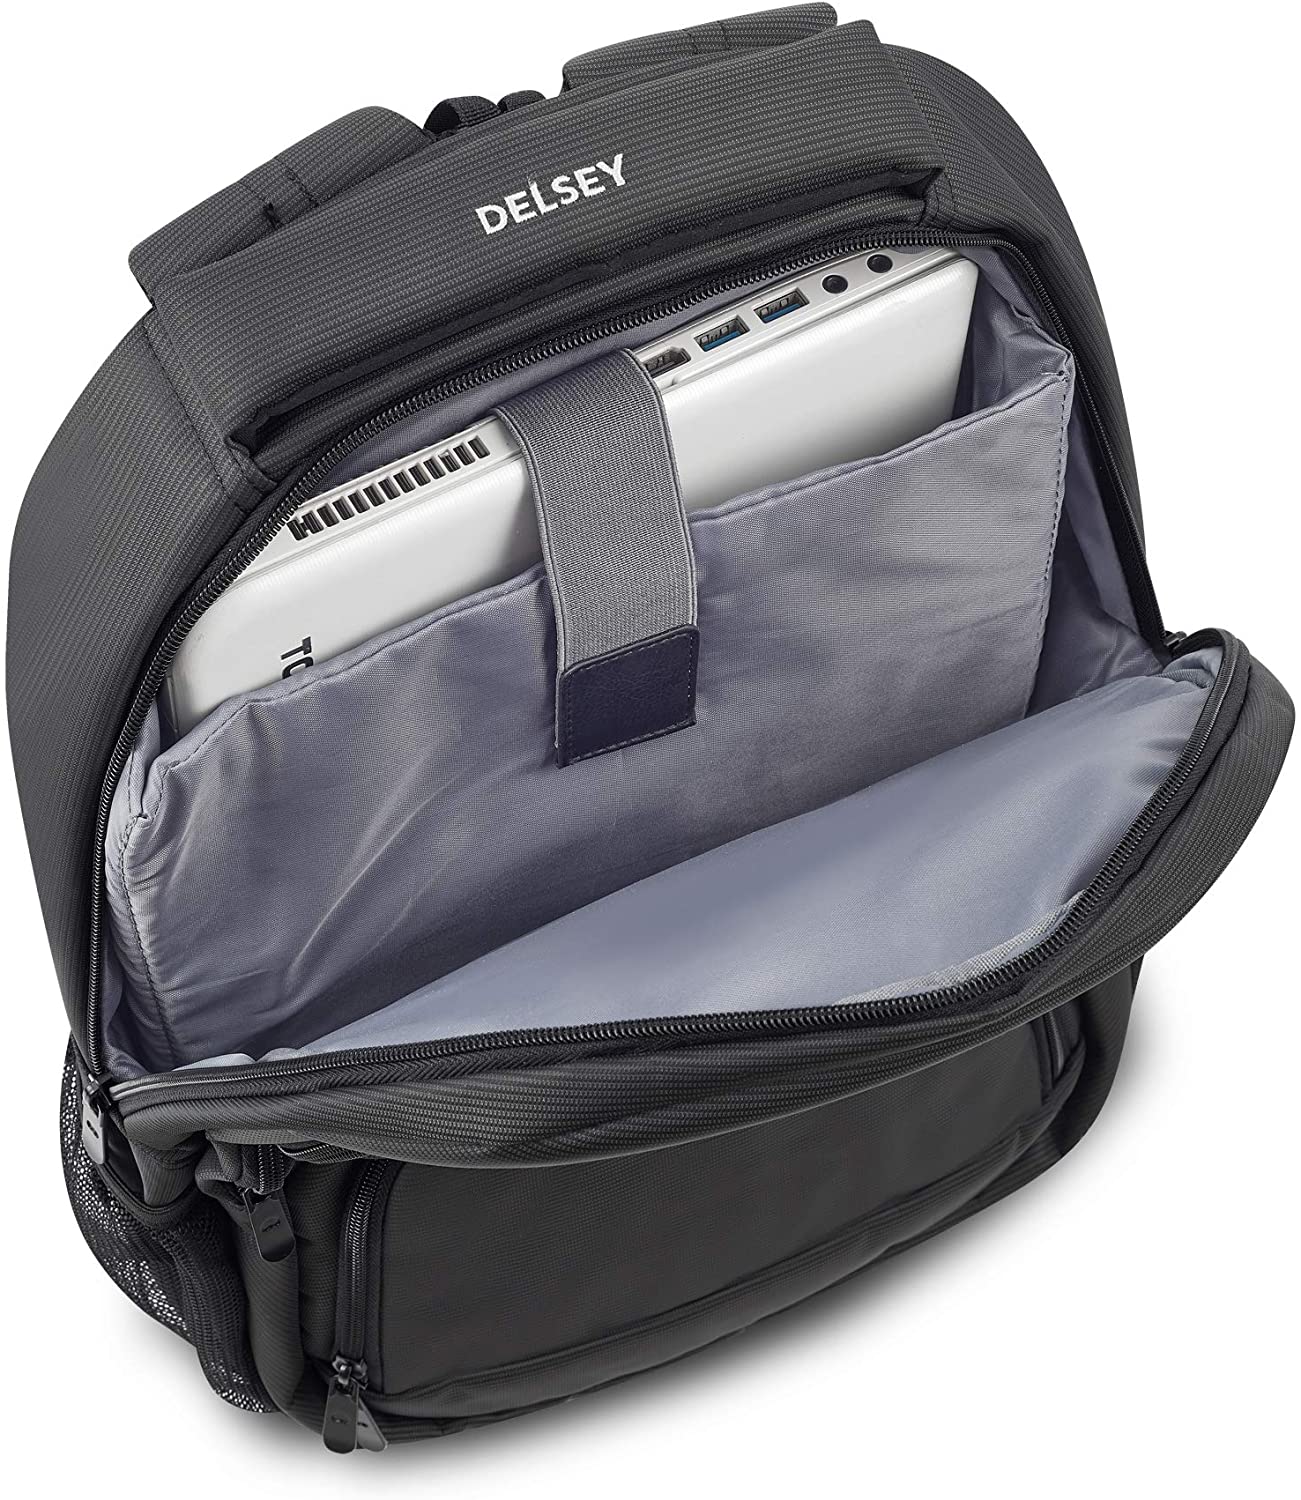 Delsey Paris Purple Rolling Under Seat Carry-on Bag Laptop Case NICE | eBay